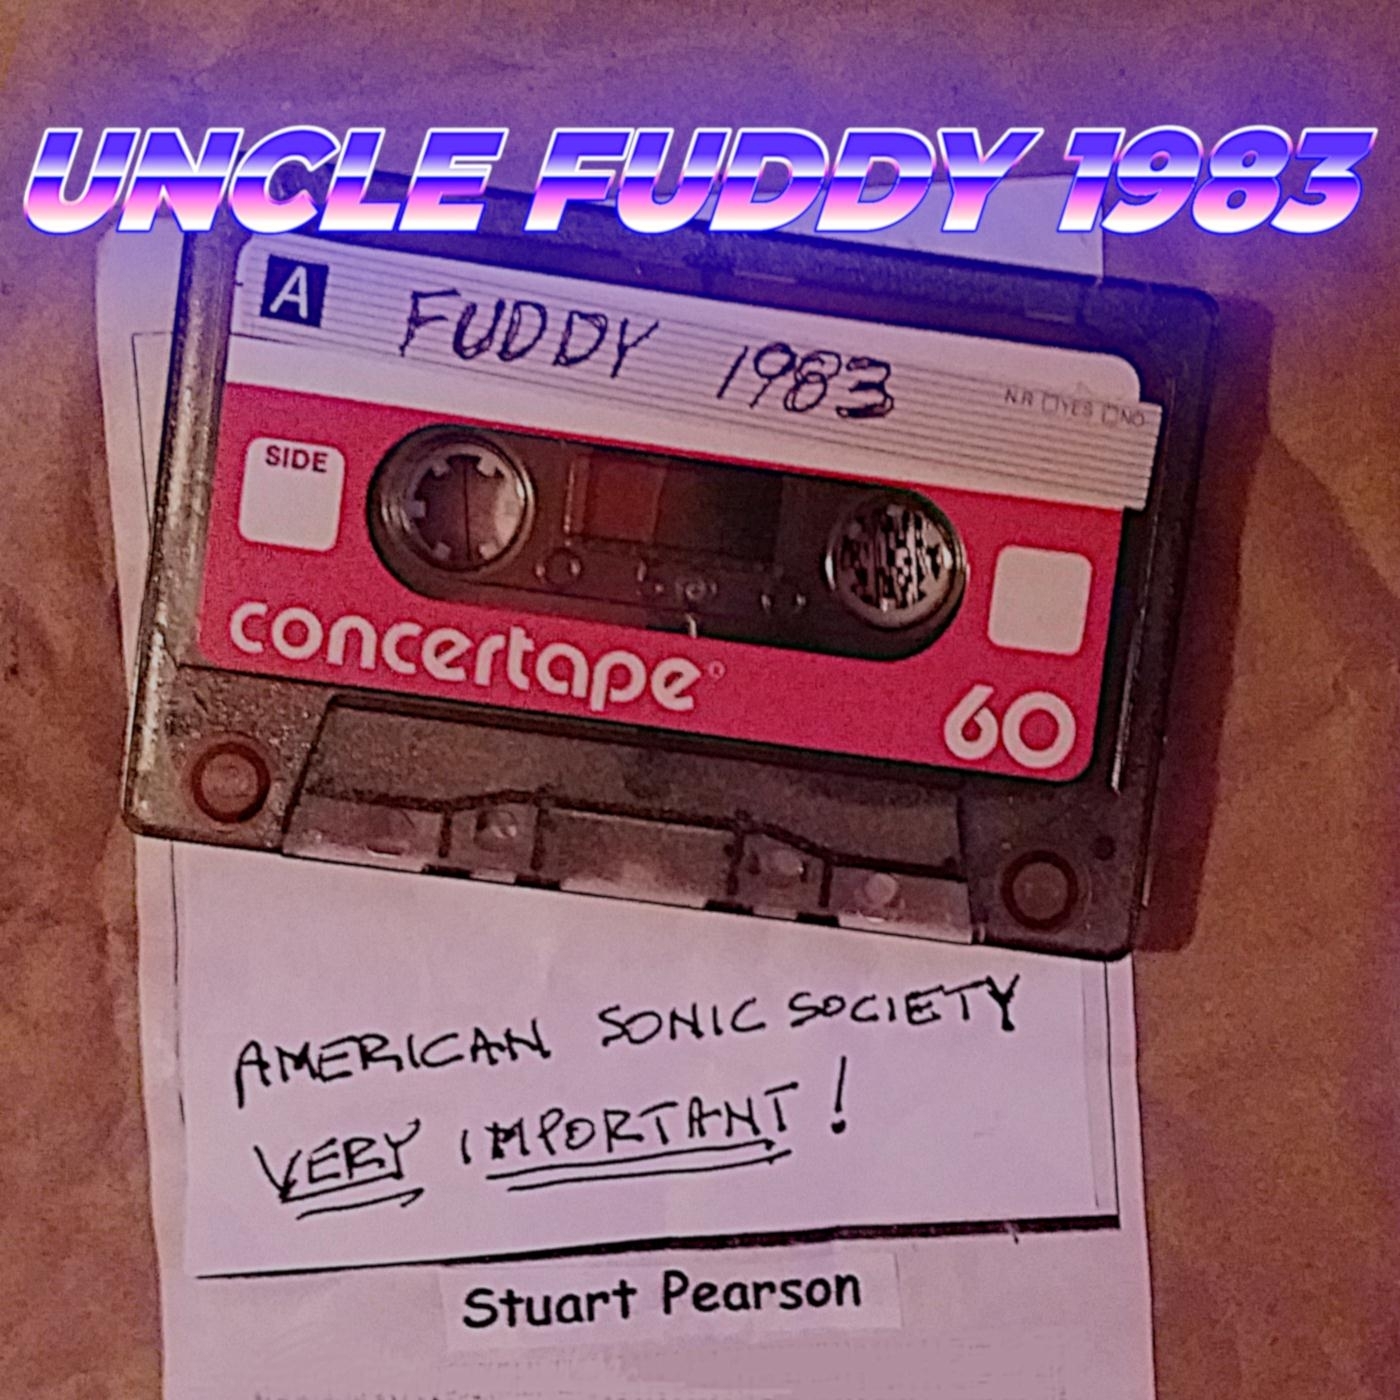 Uncle Fuddy 1983